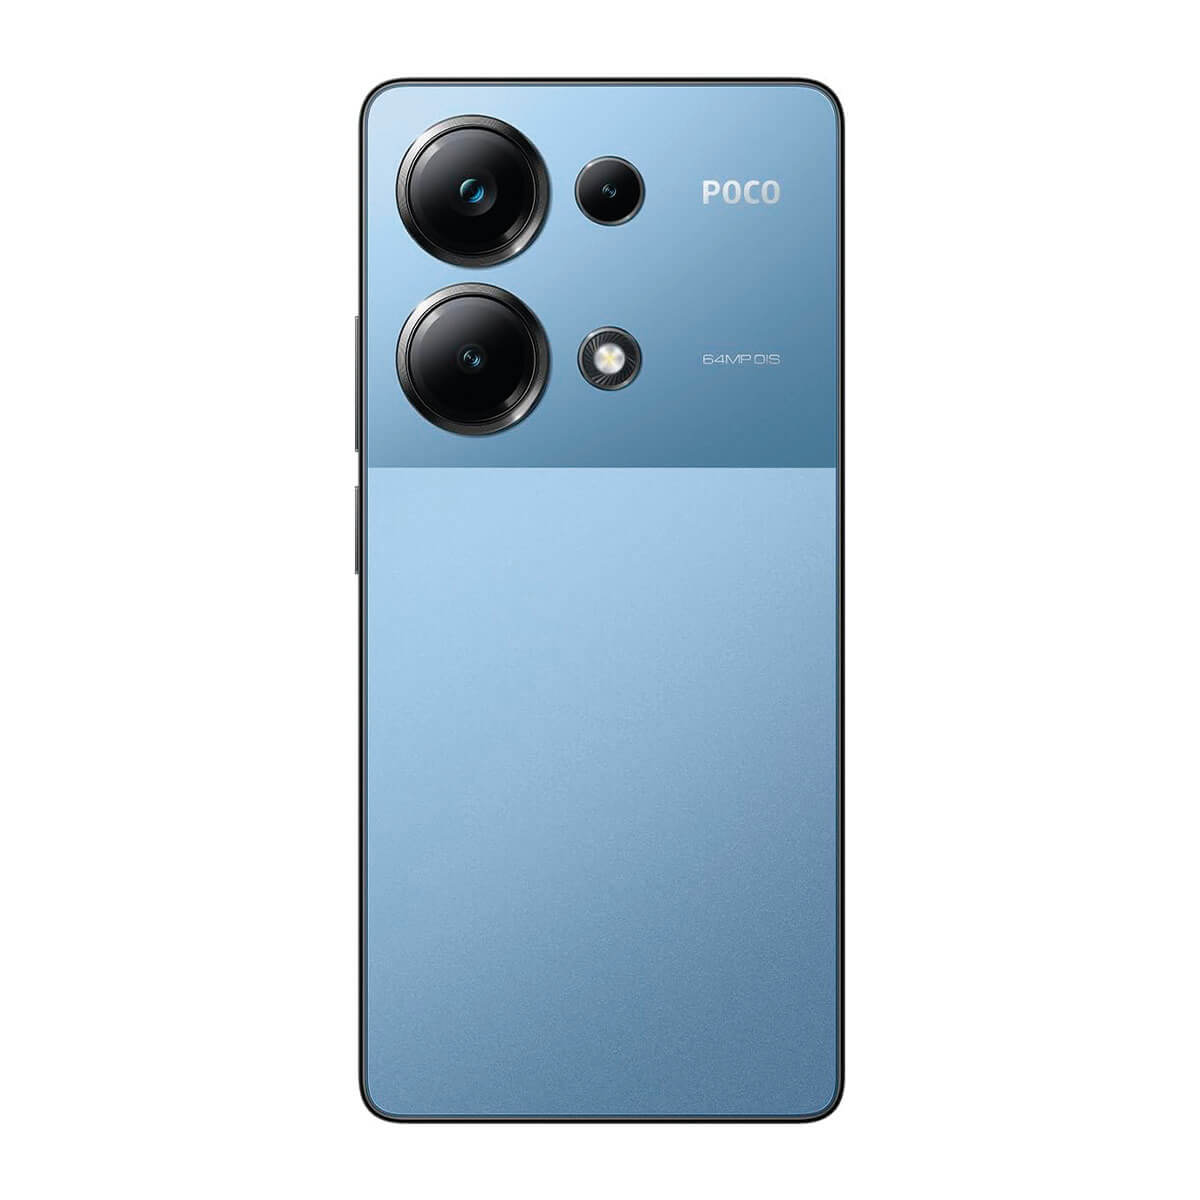 Xiaomi POCO M6 Pro 12 Go/512 Go Bleu (Bleu) Double SIM